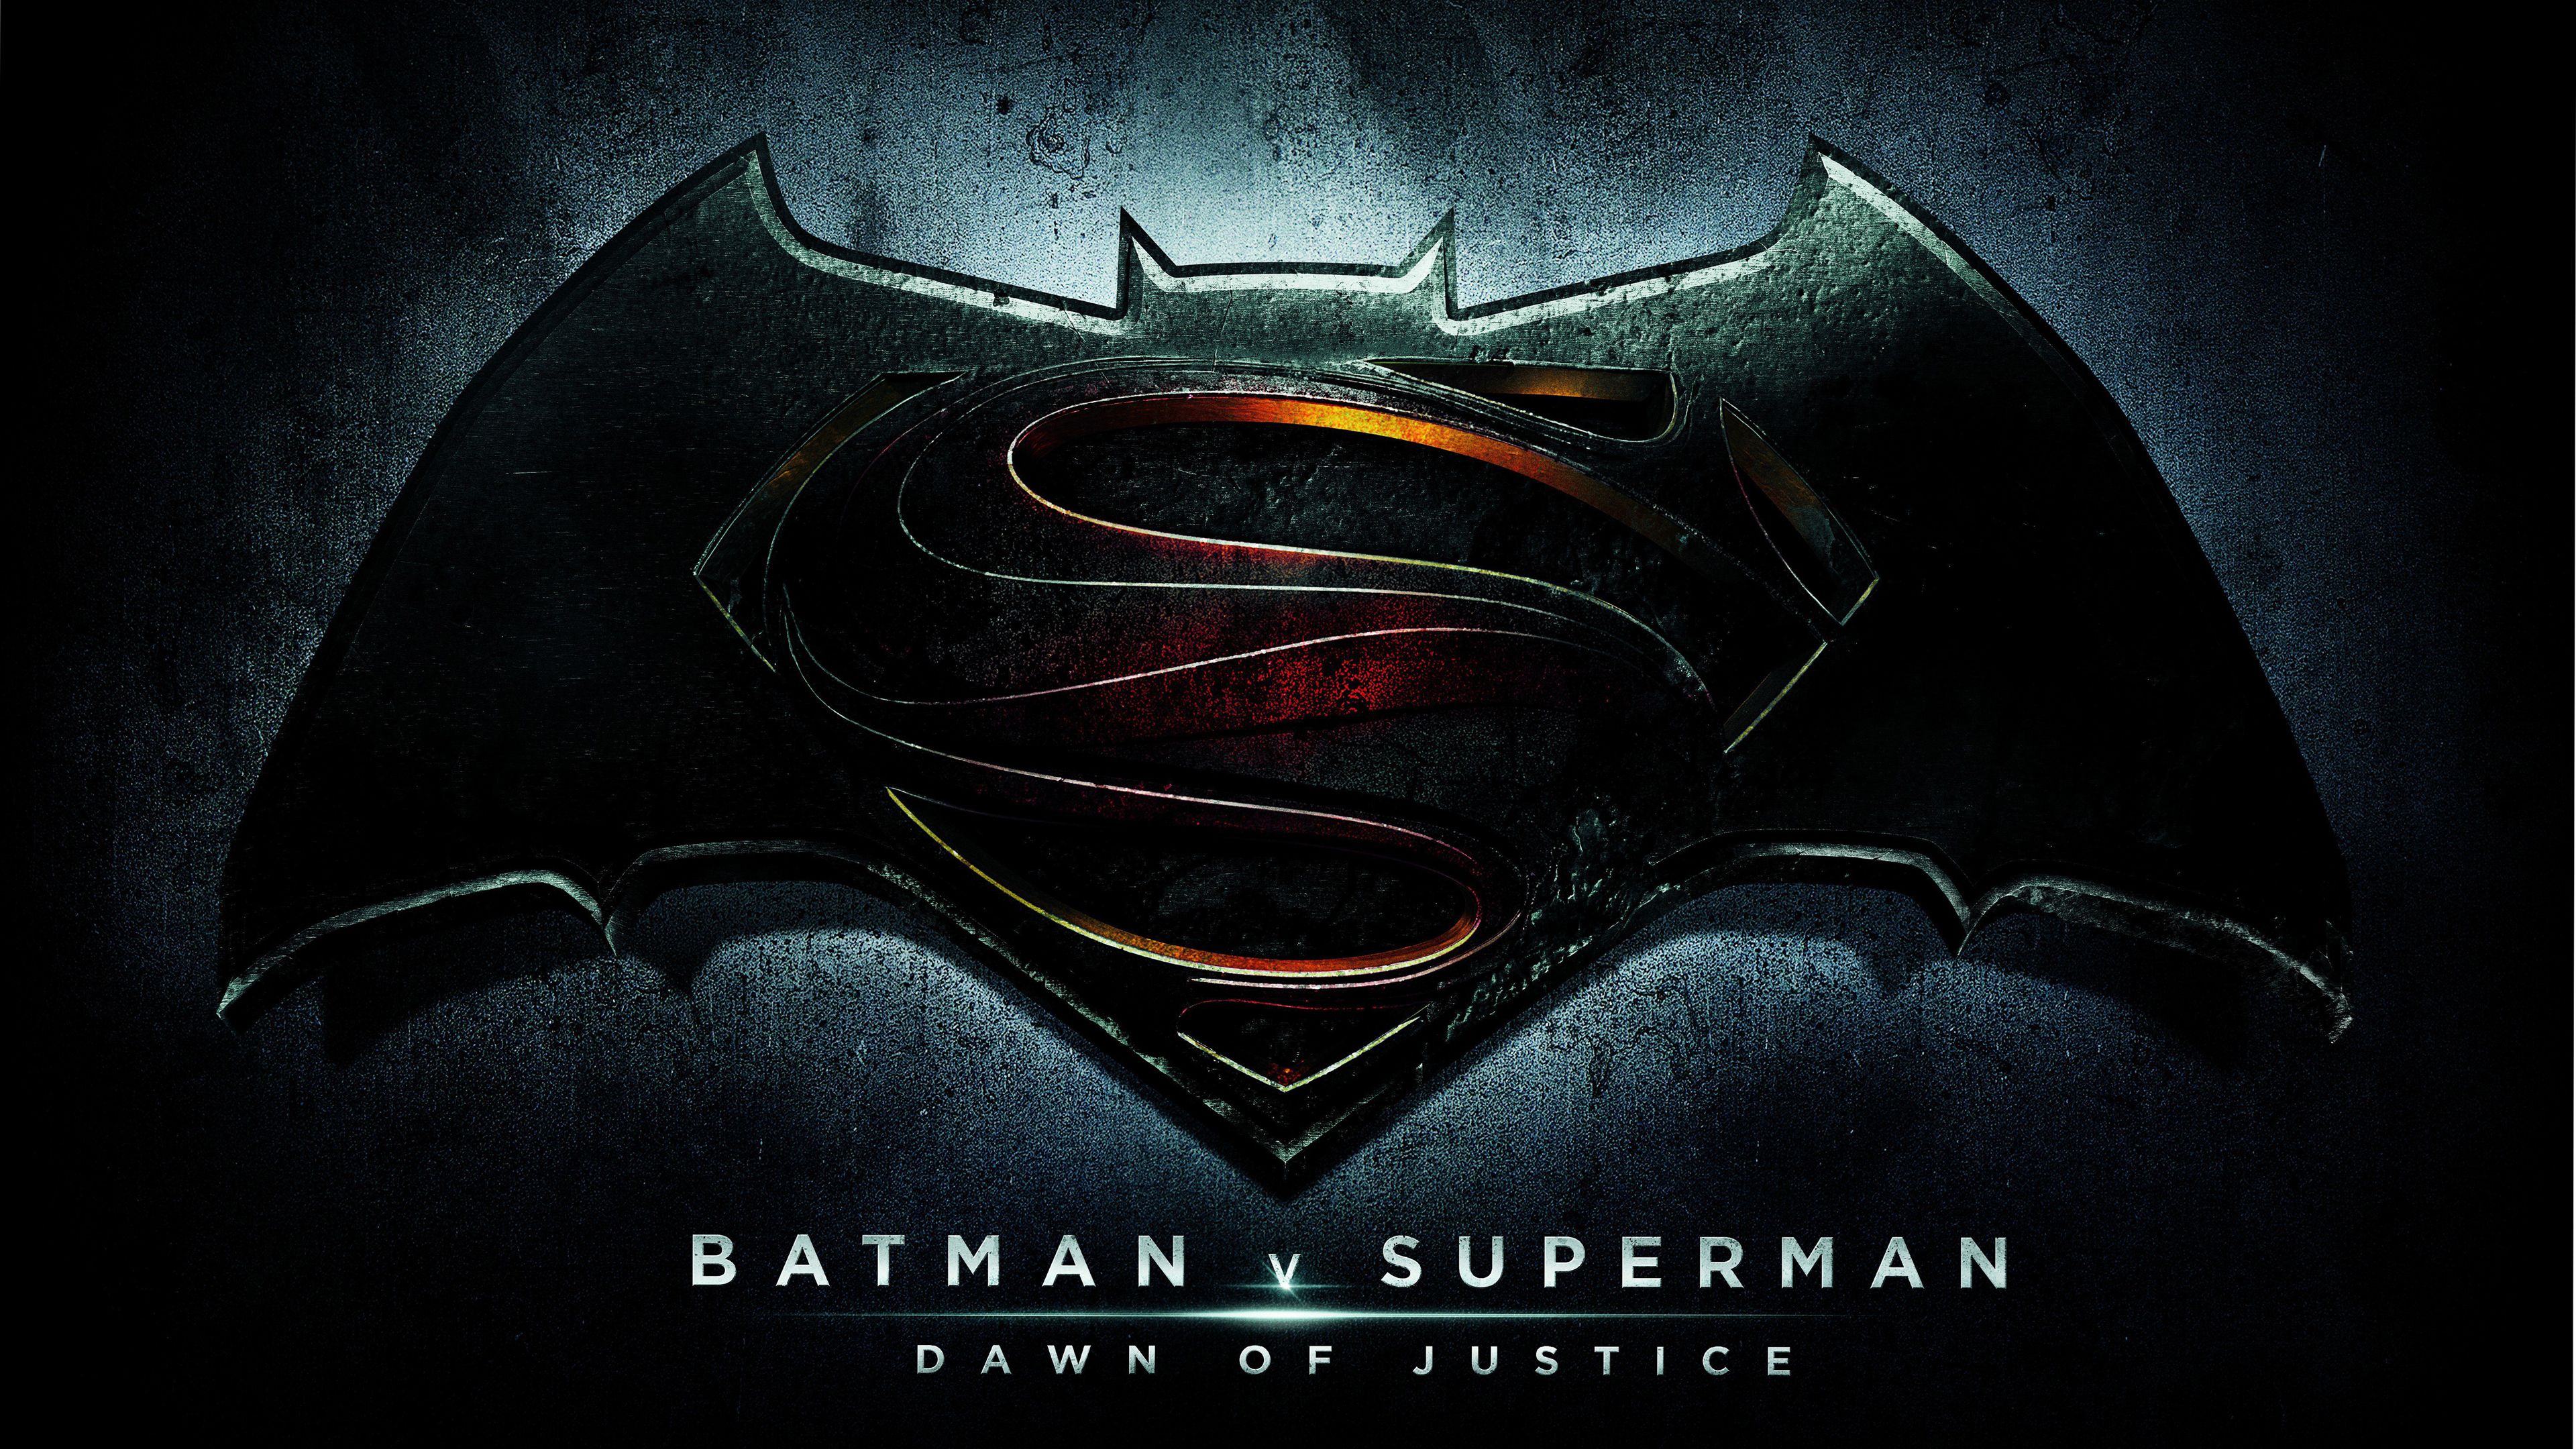 Batman v Superman Ultra HD 4K WallpaperBatman v Superman Ultra HD 4K Wallpaper. Batman v superman poster, Batman v superman: dawn of justice, Batman and superman